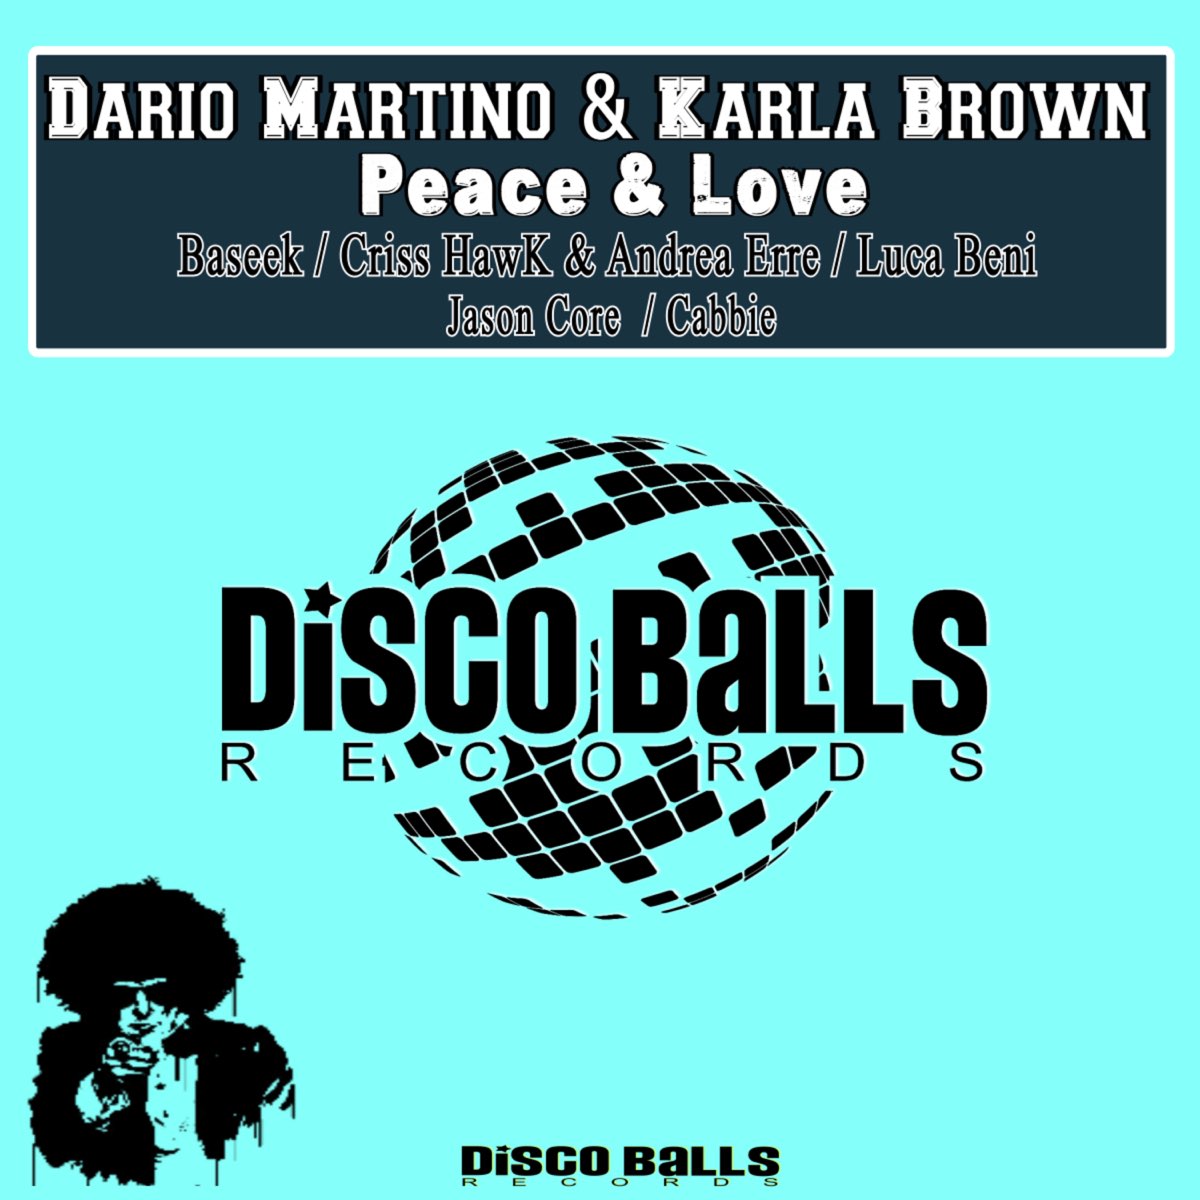 Peace & Love by Dario Martino & Karla Brown on Apple Music